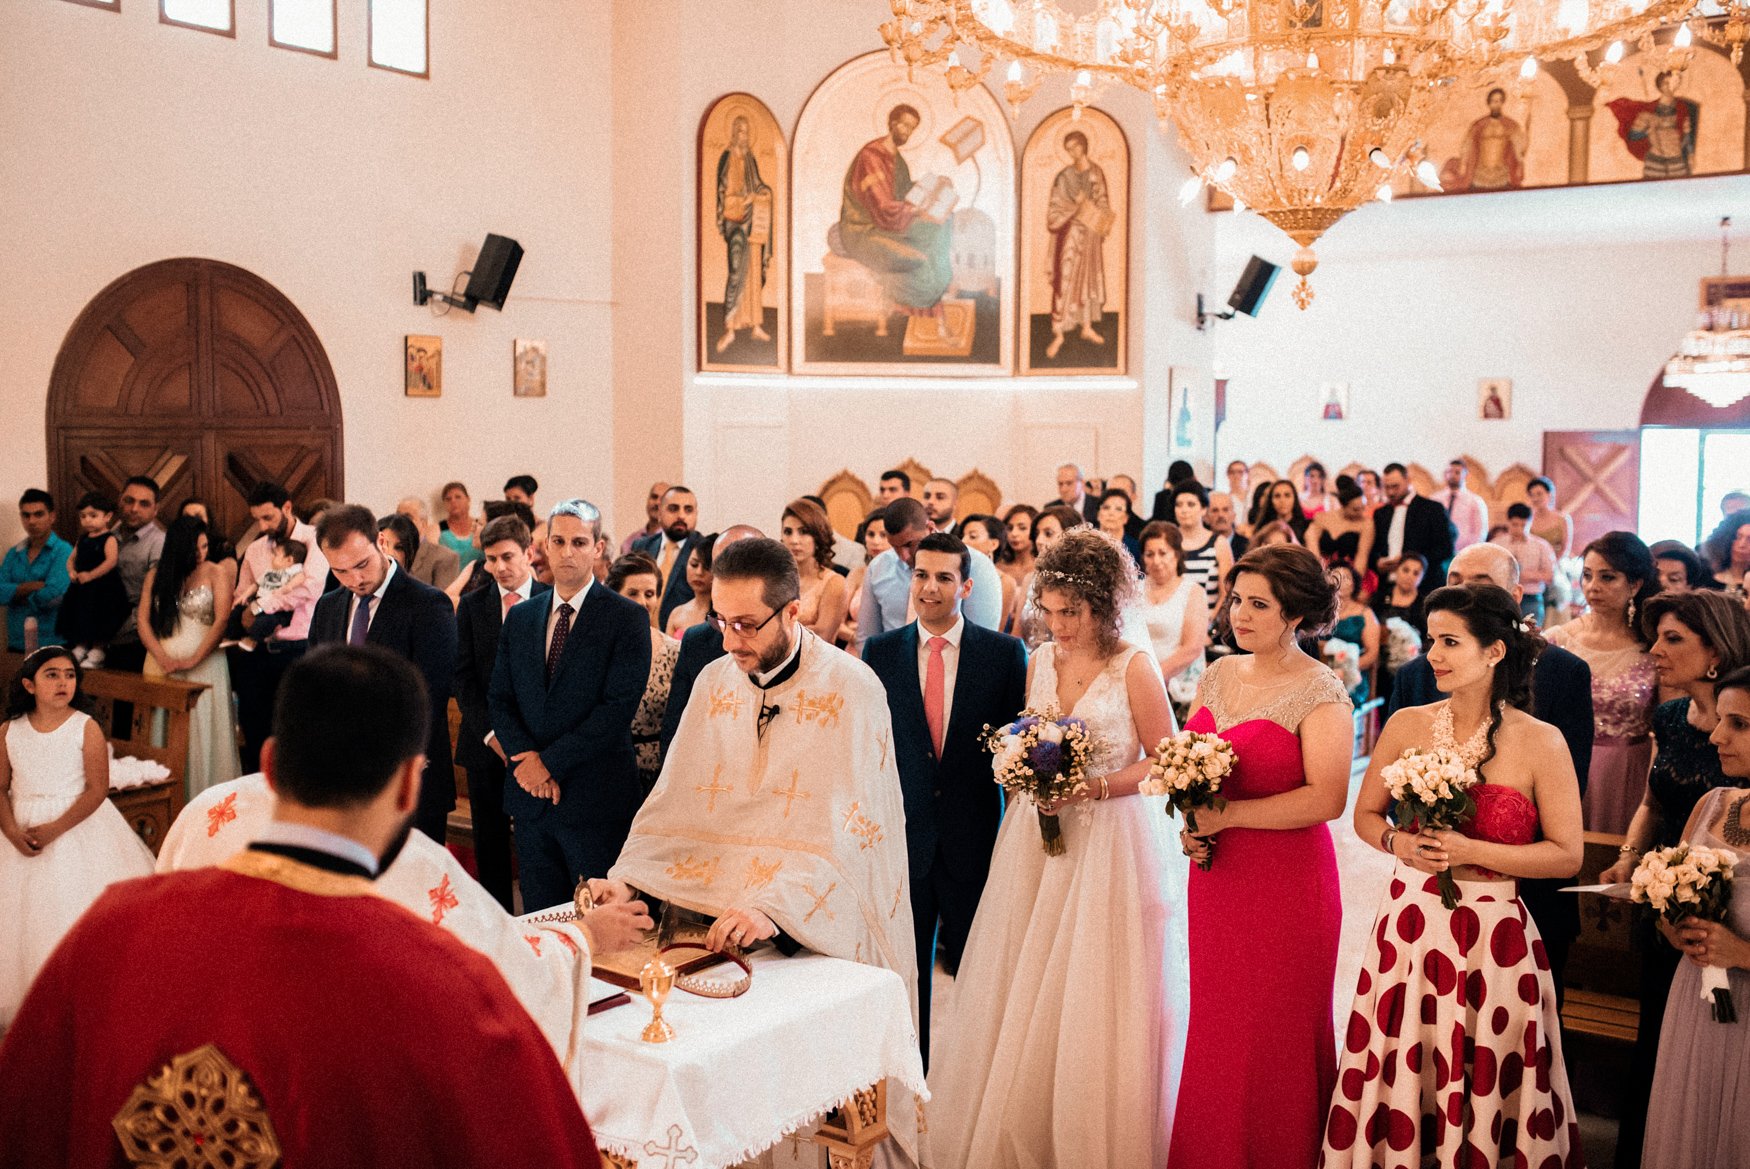 LR3 byblos beirut church wedding ceremony lebanon 006.jpg